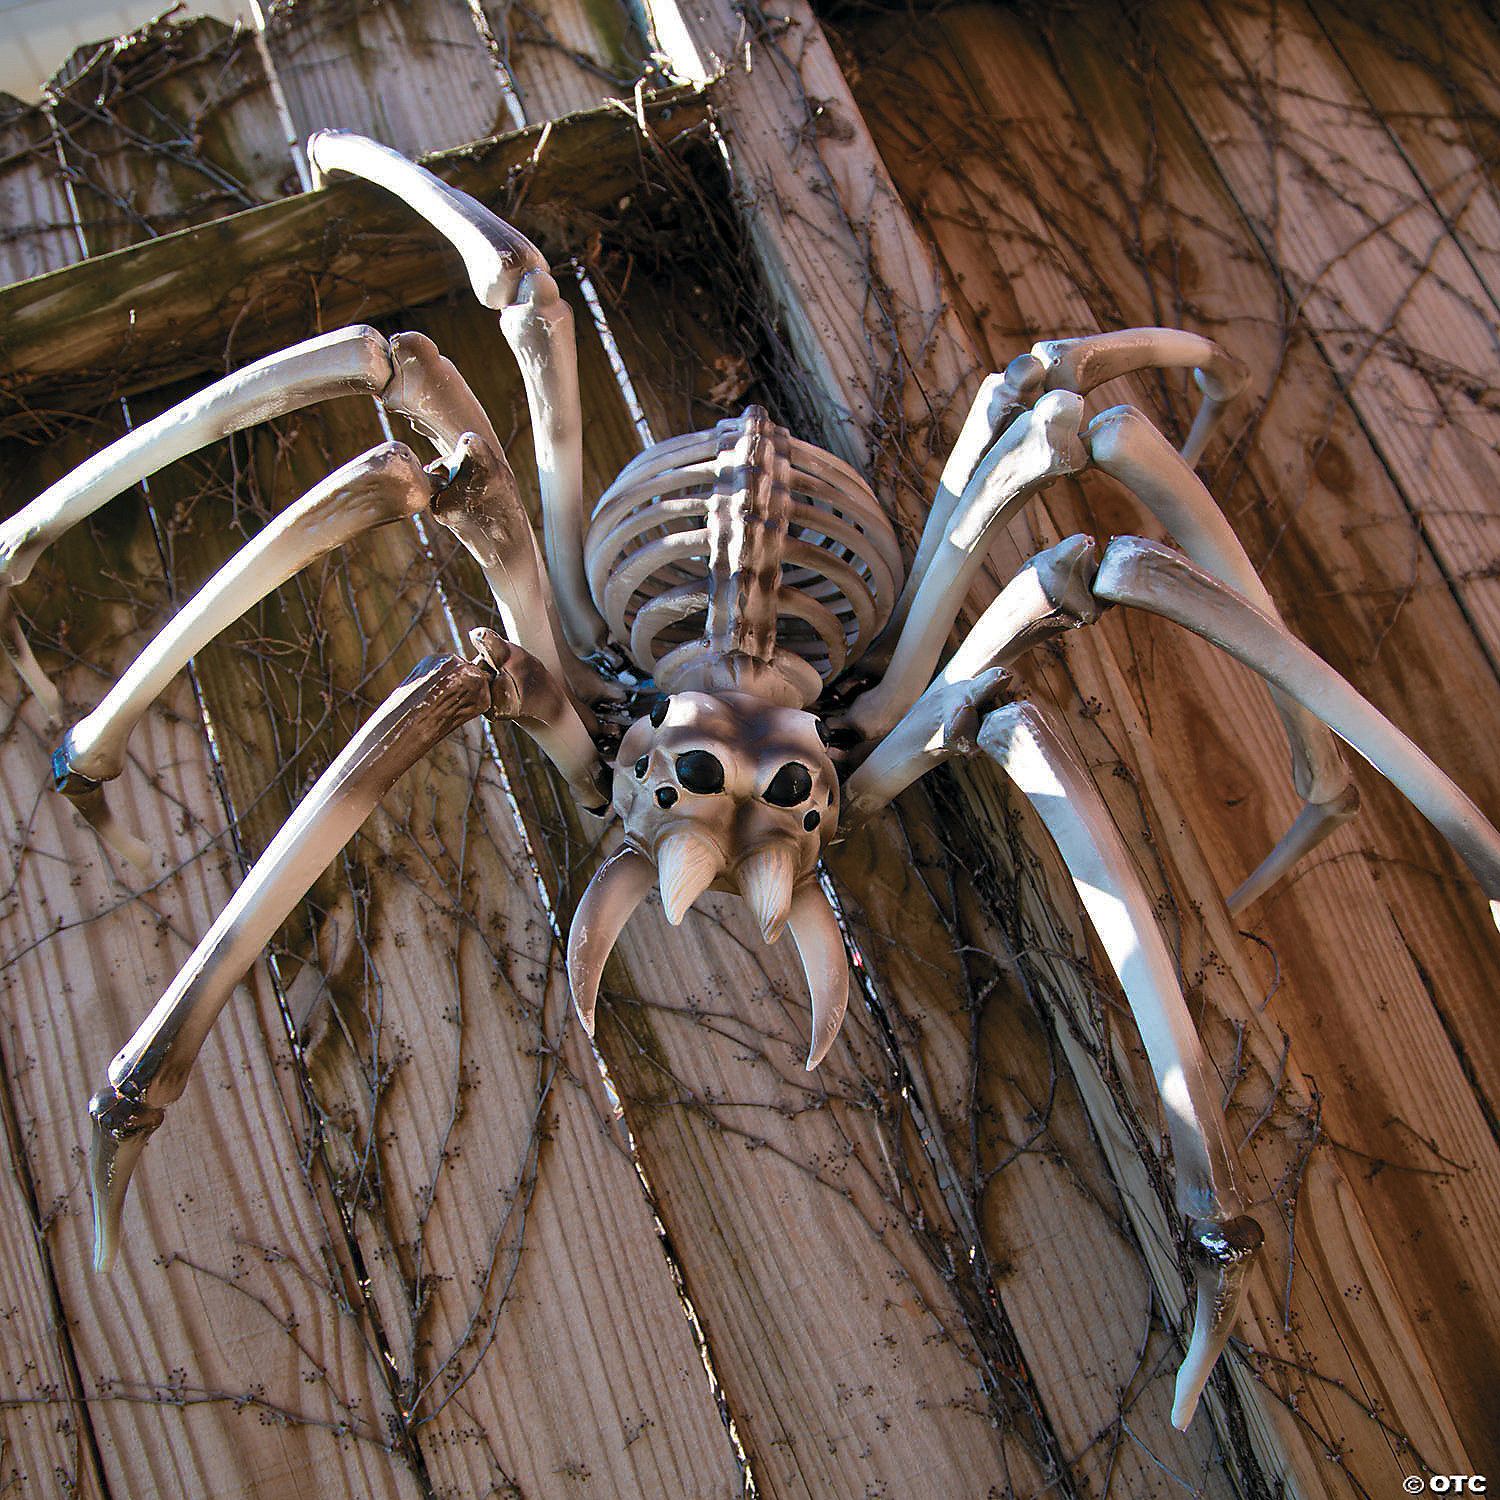 Giant Spider Skeleton Halloween Decoration